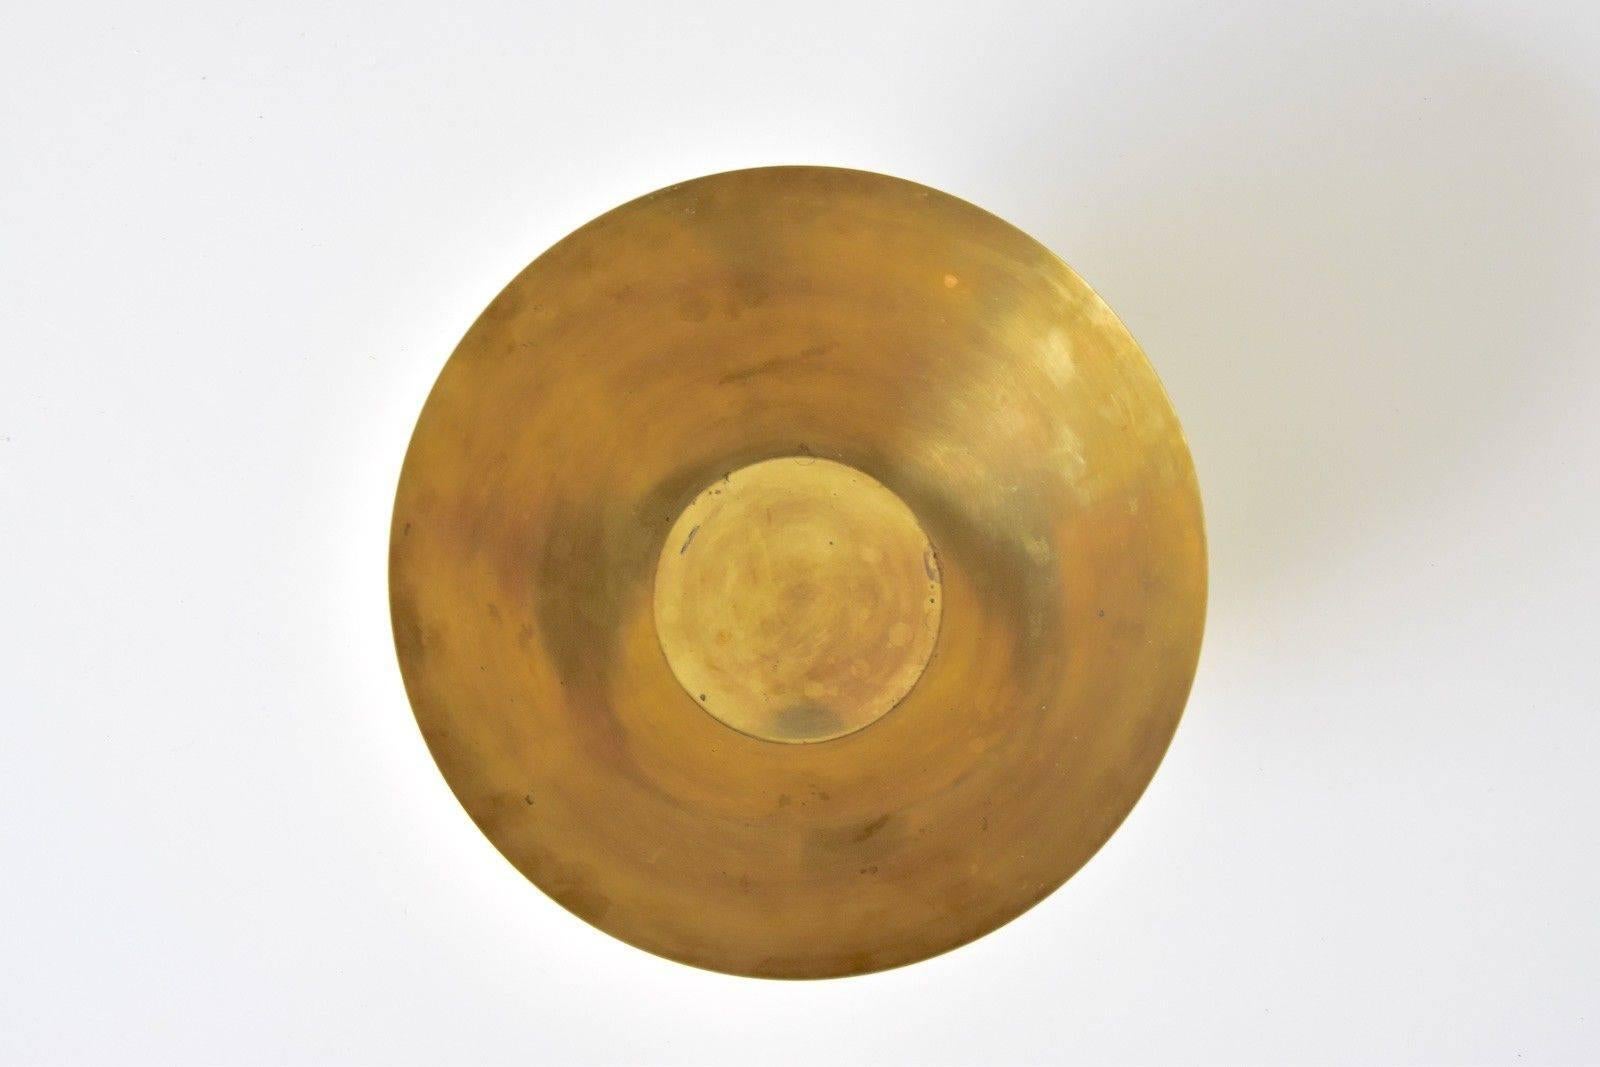 Scandinavian Modern Arne Jacobsen Brass Line Bowl by Stelton Made in Denmark